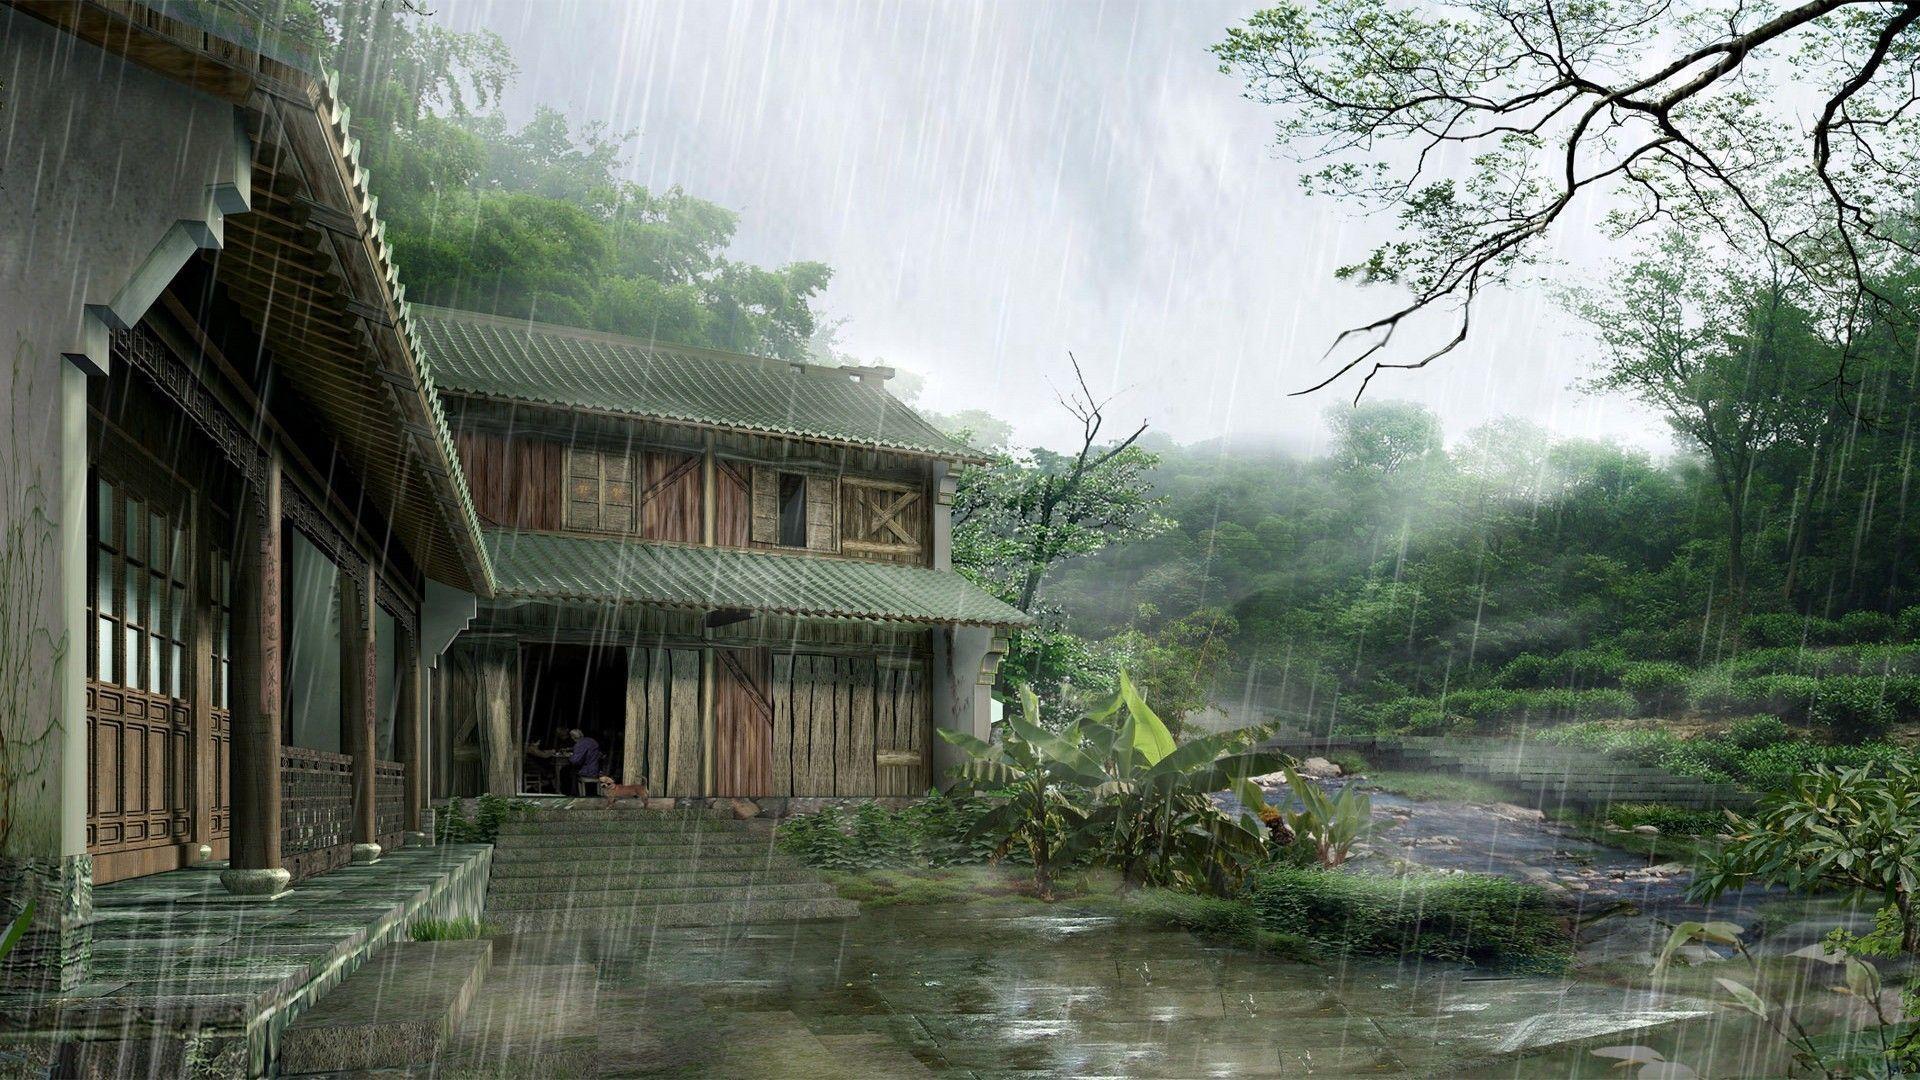 Wallpaper For > Animated Raining Background